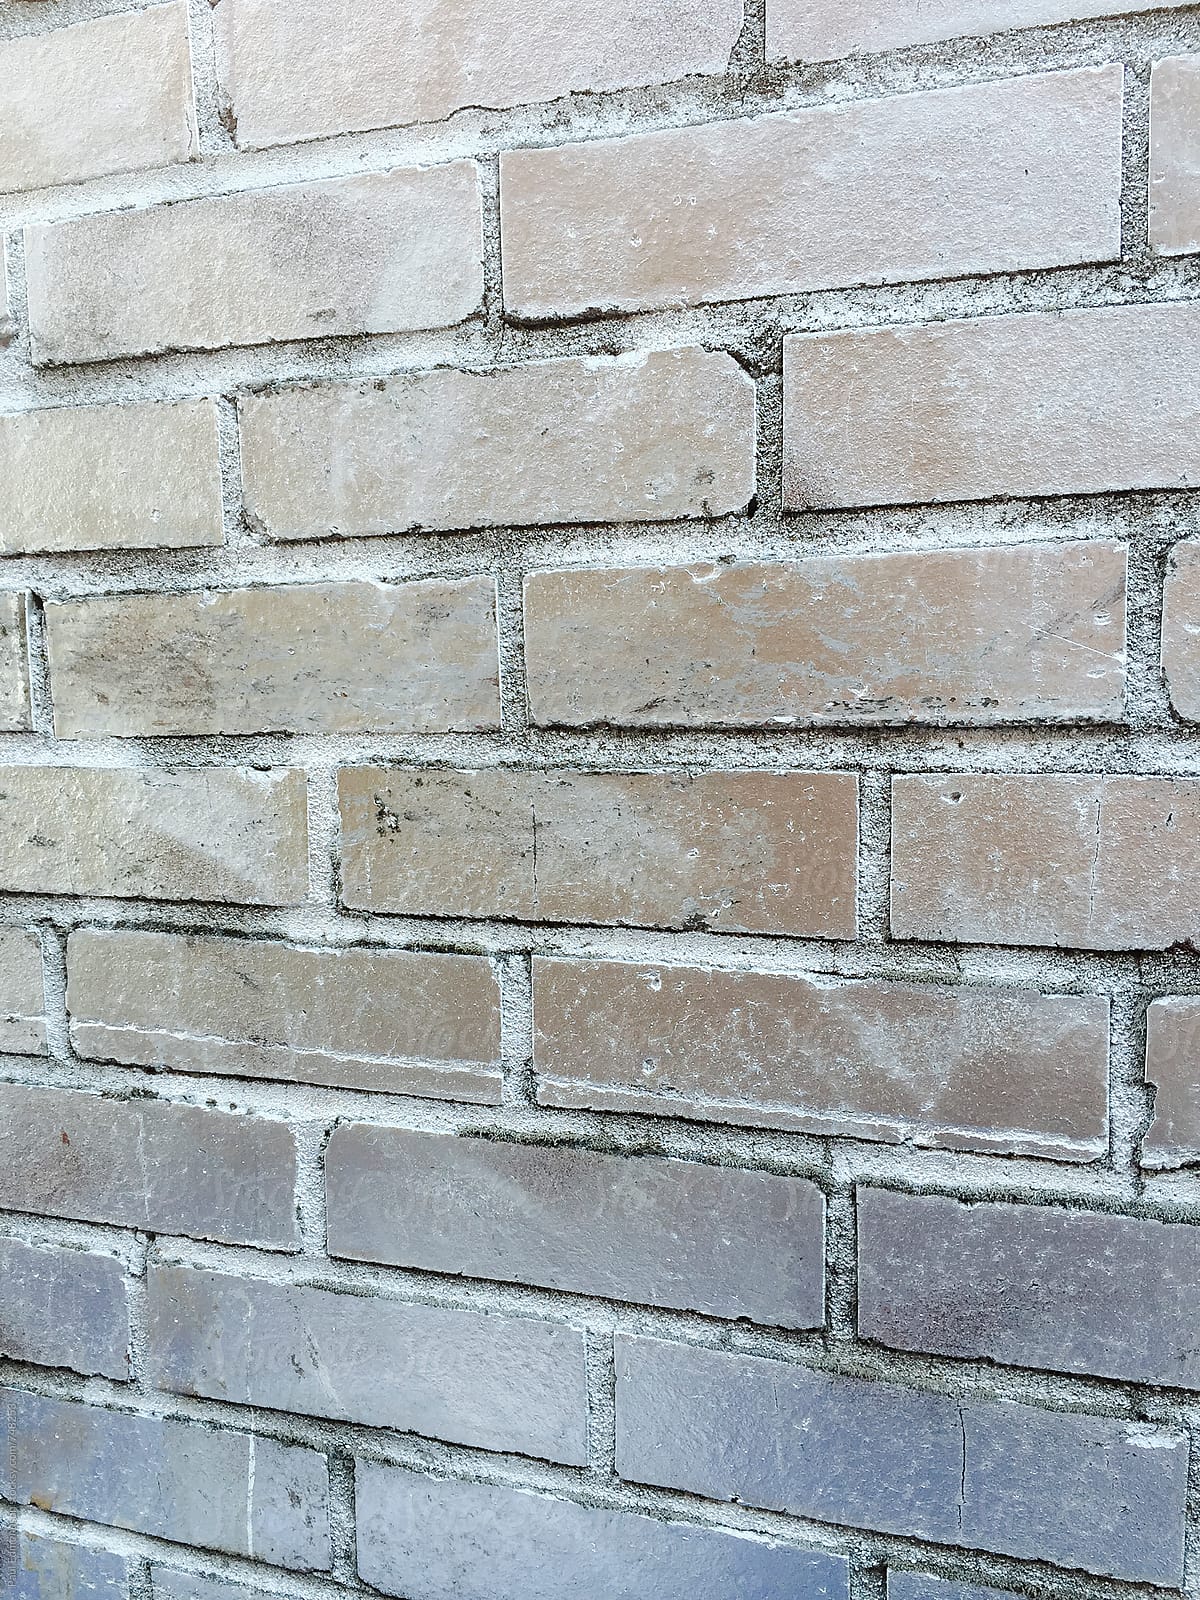 Silver paint covering graffiti tags on brick wall, close up